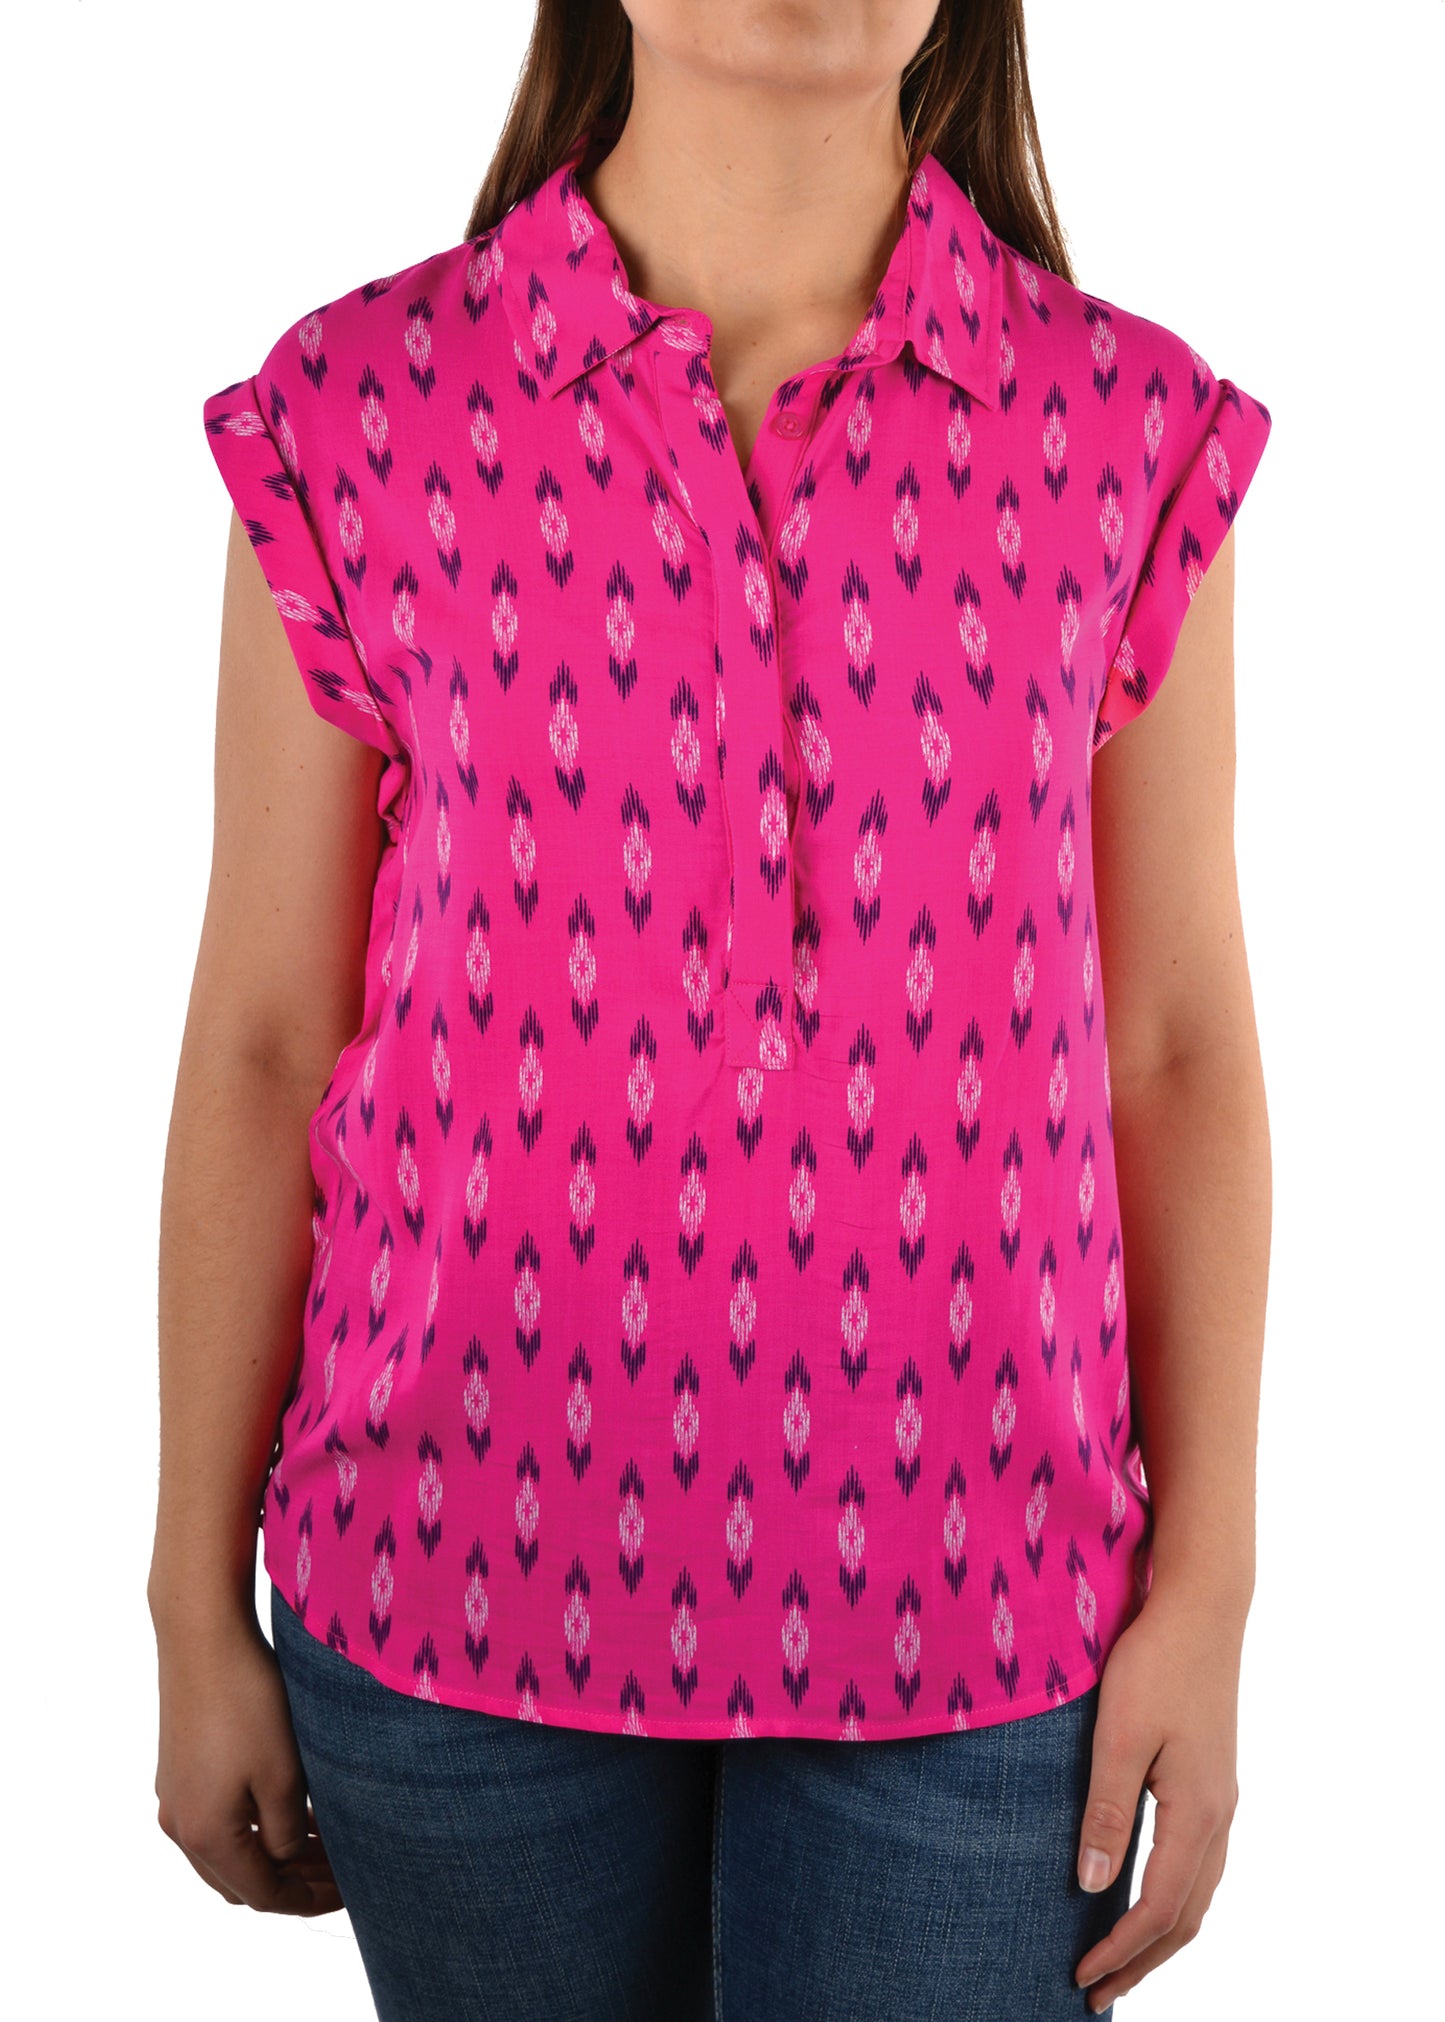 Wrangler Ladies Cybill Print Sleeveless Shirt - X1S2136708 - On Sale